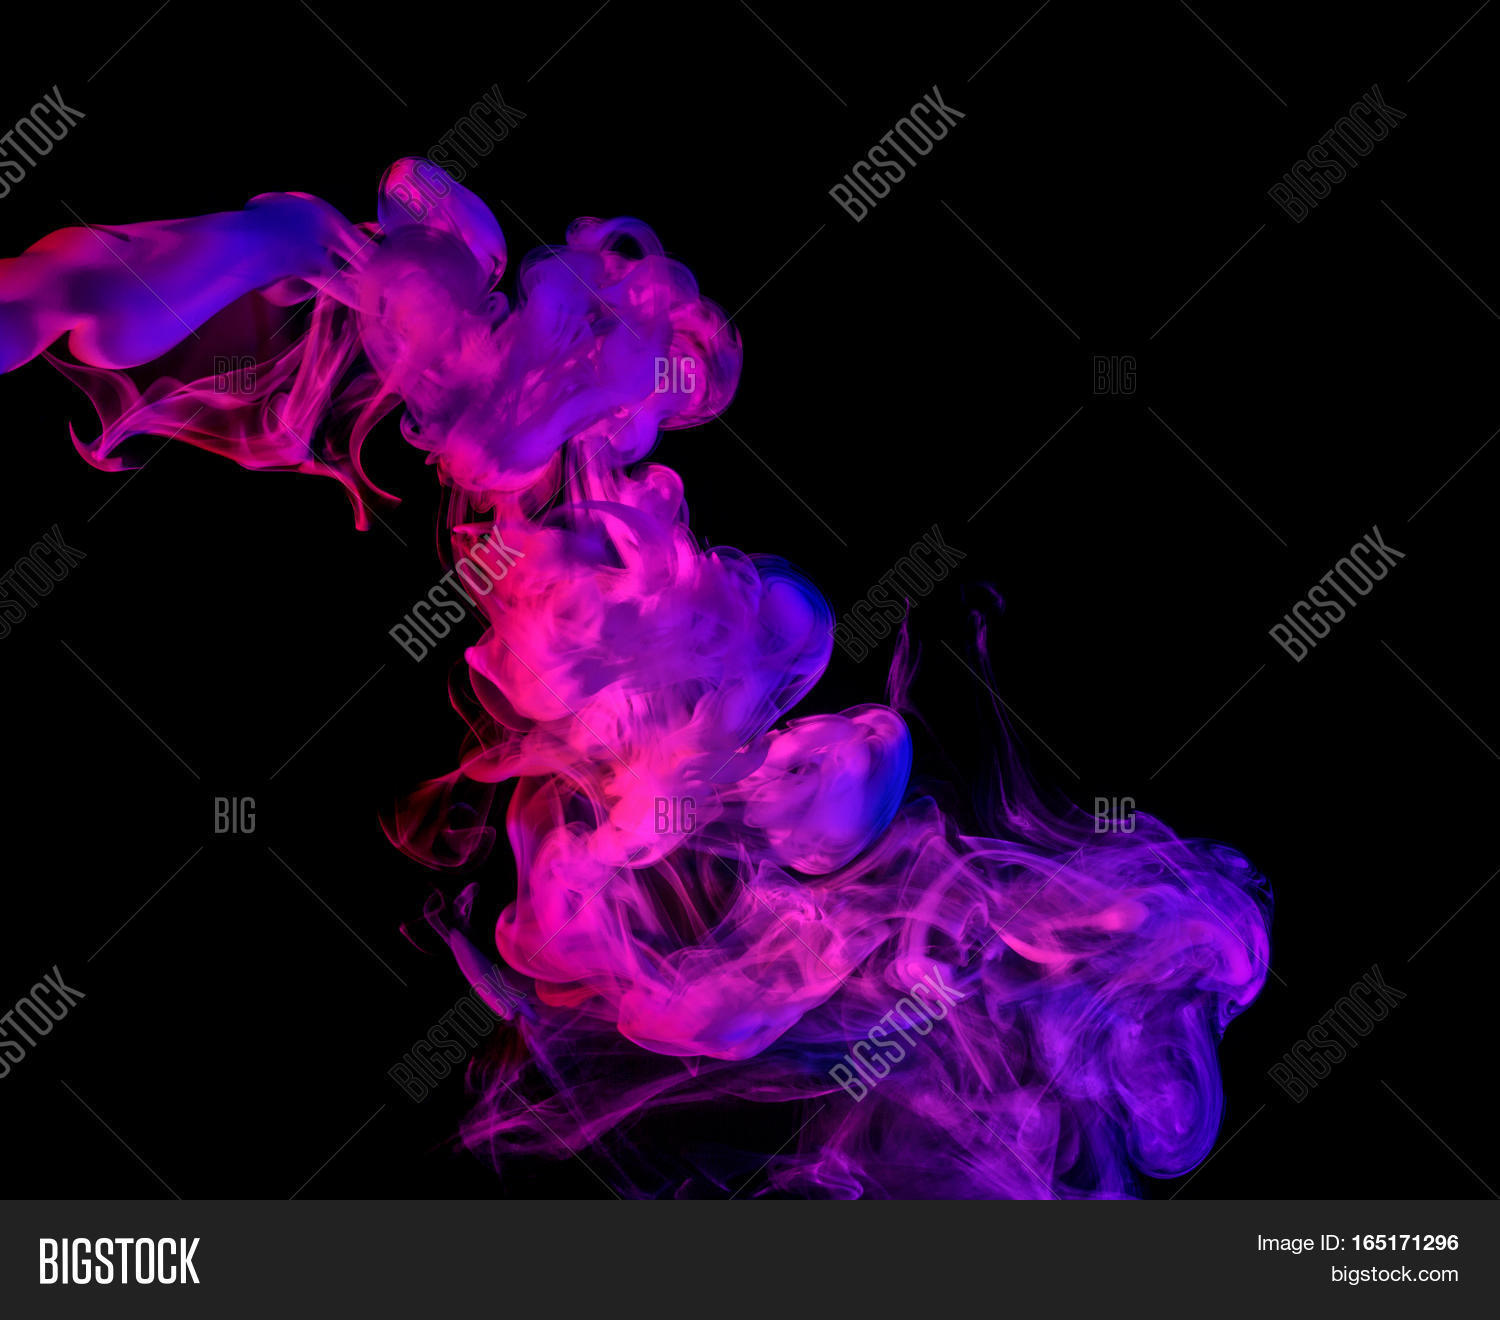 Abstract Smoke Weipa. Personal Image & Photo | Bigstock